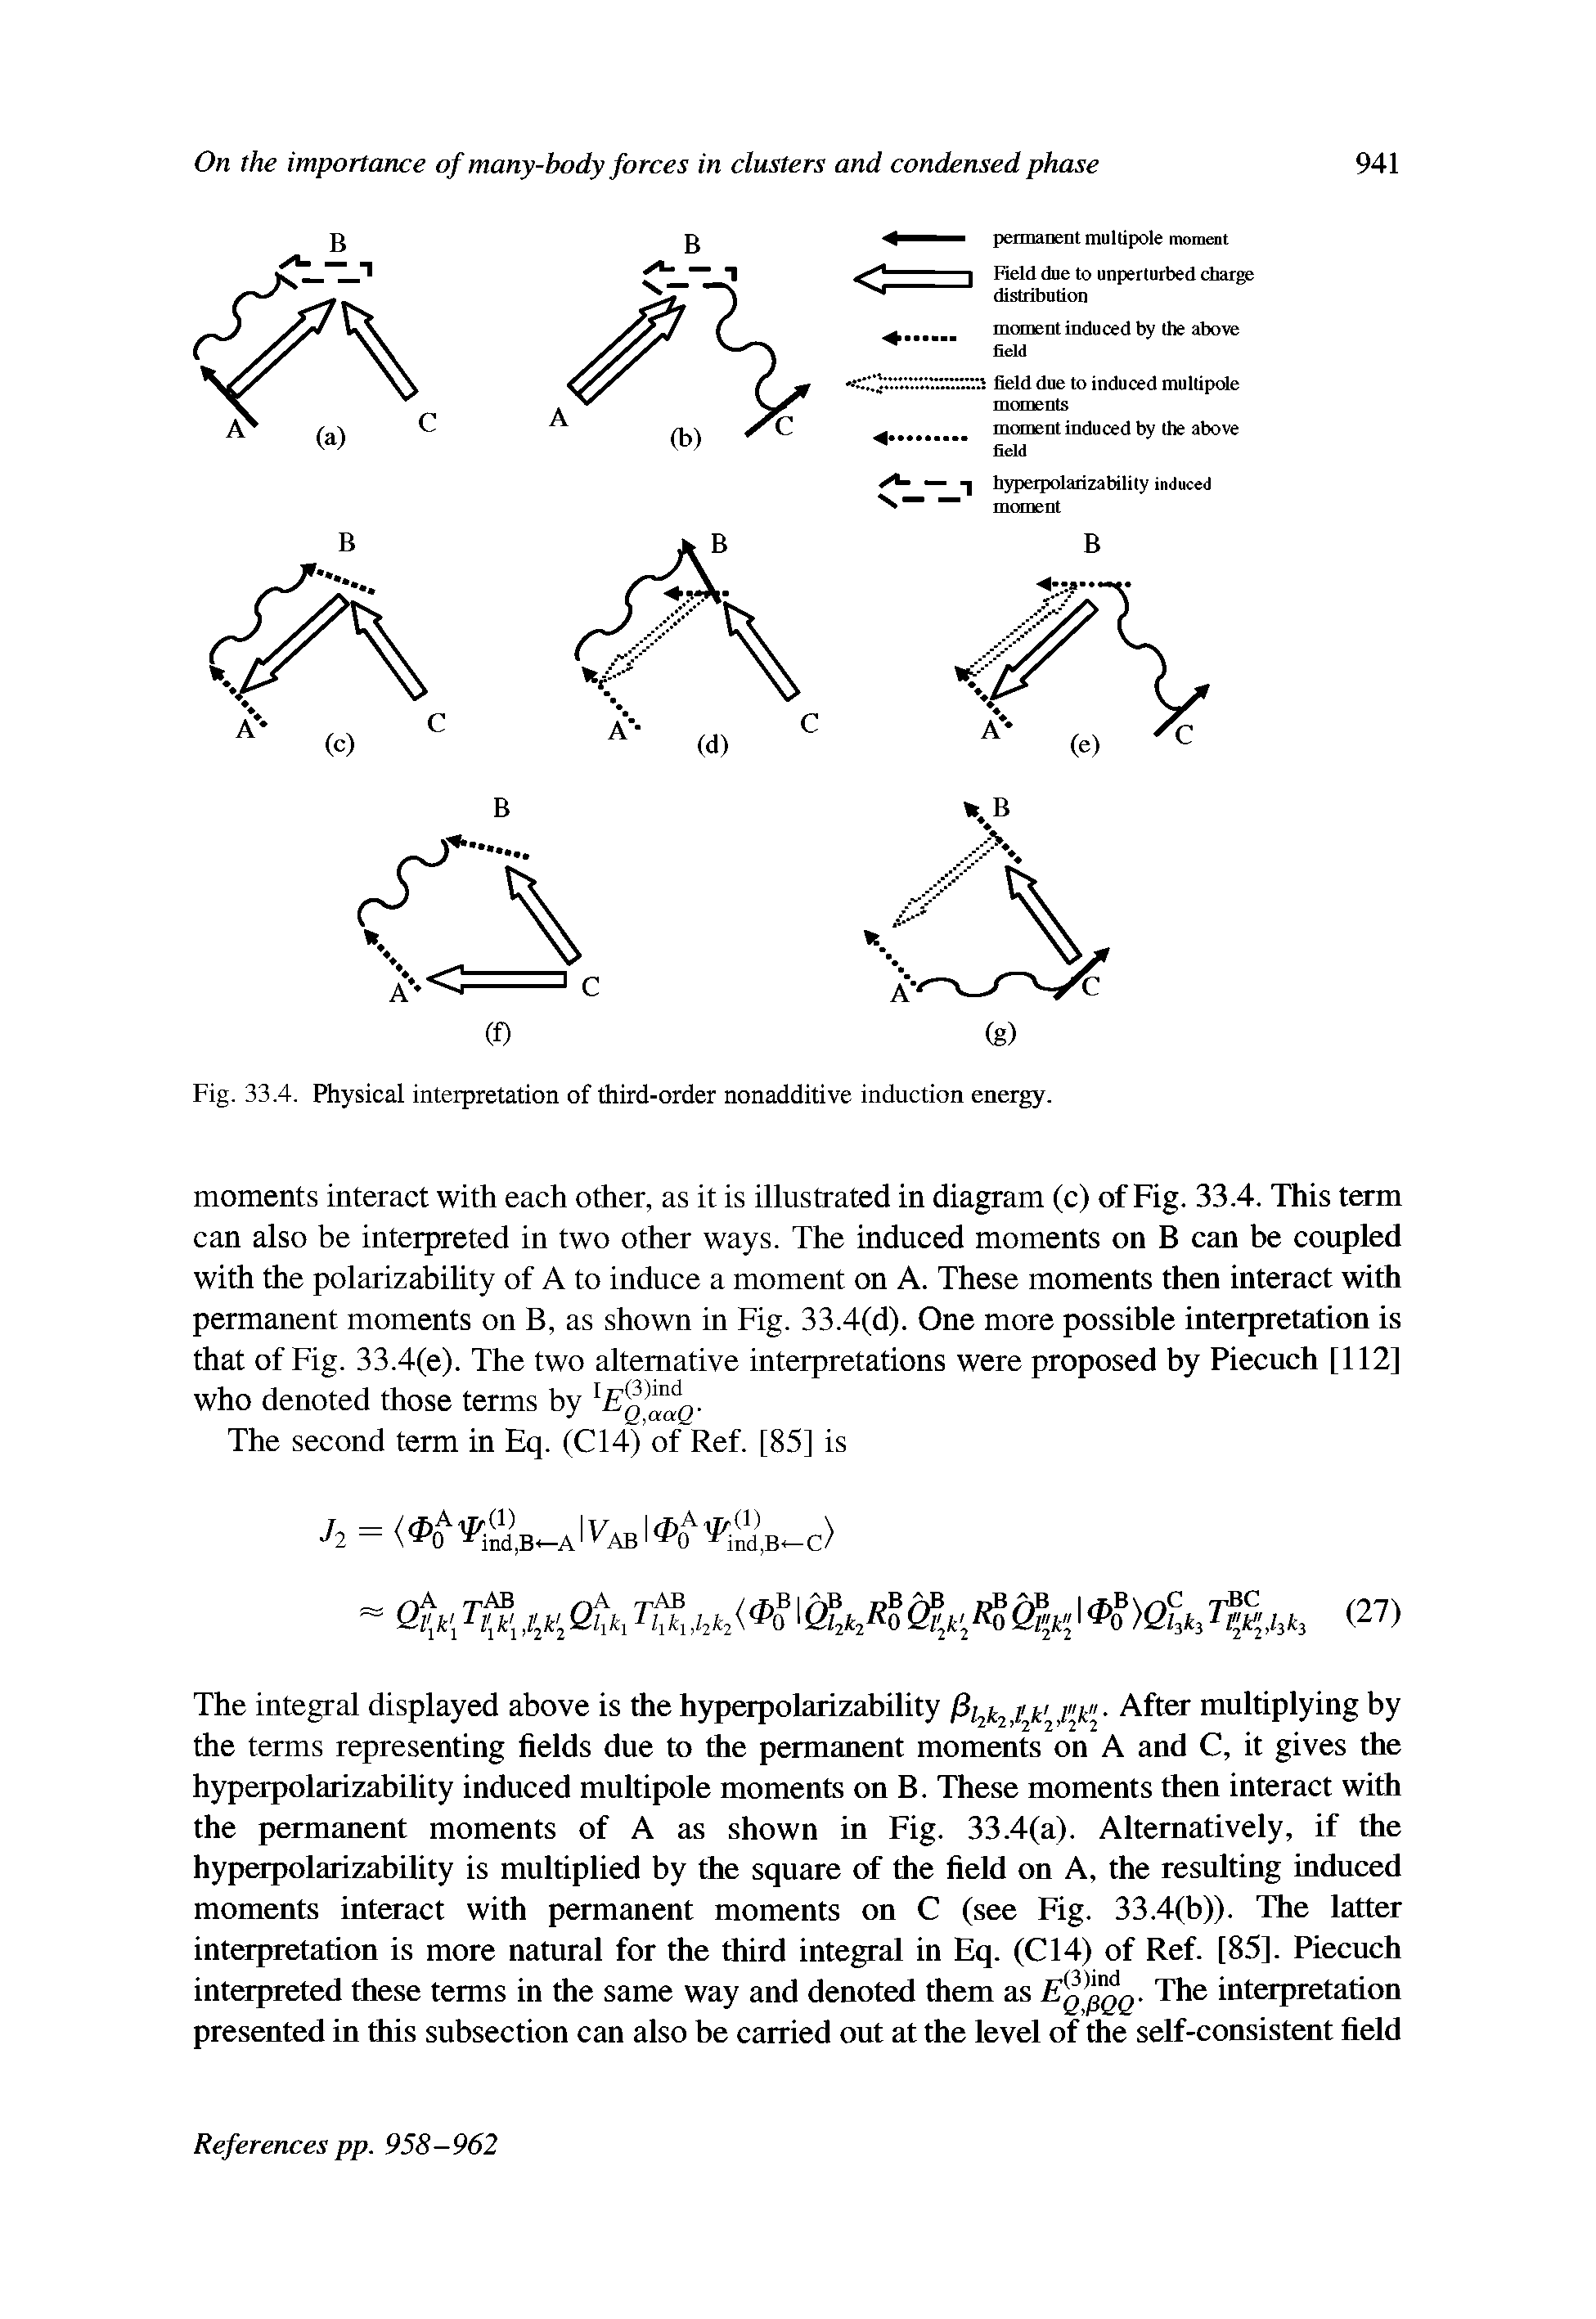 Fig. 33.4. Physical interpretation of third-order nonadditive induction energy.